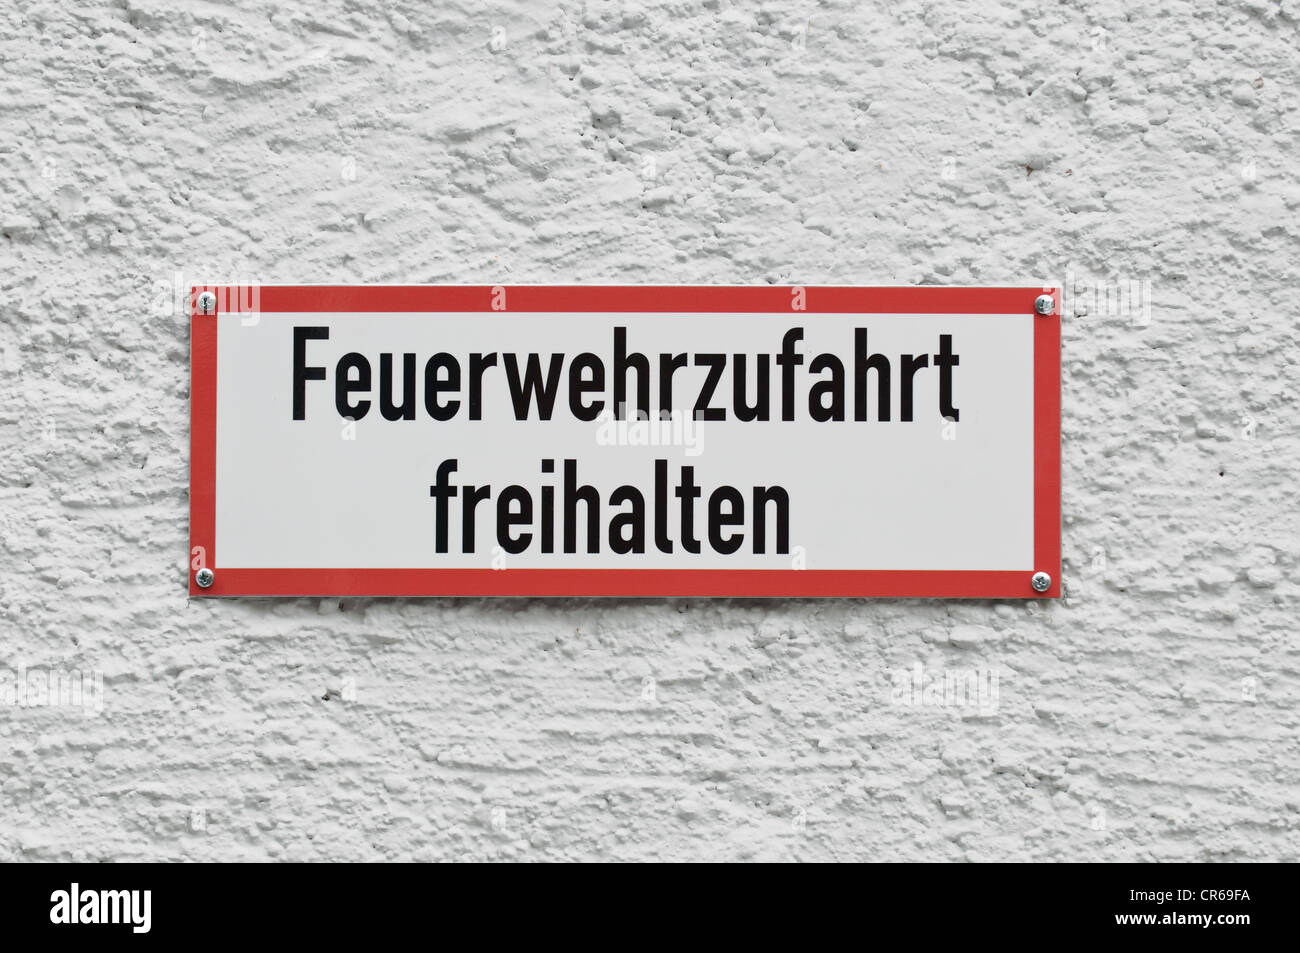 Sign, Feuerwehrzufahrt freihalten, German for keep clear for fire services Stock Photo